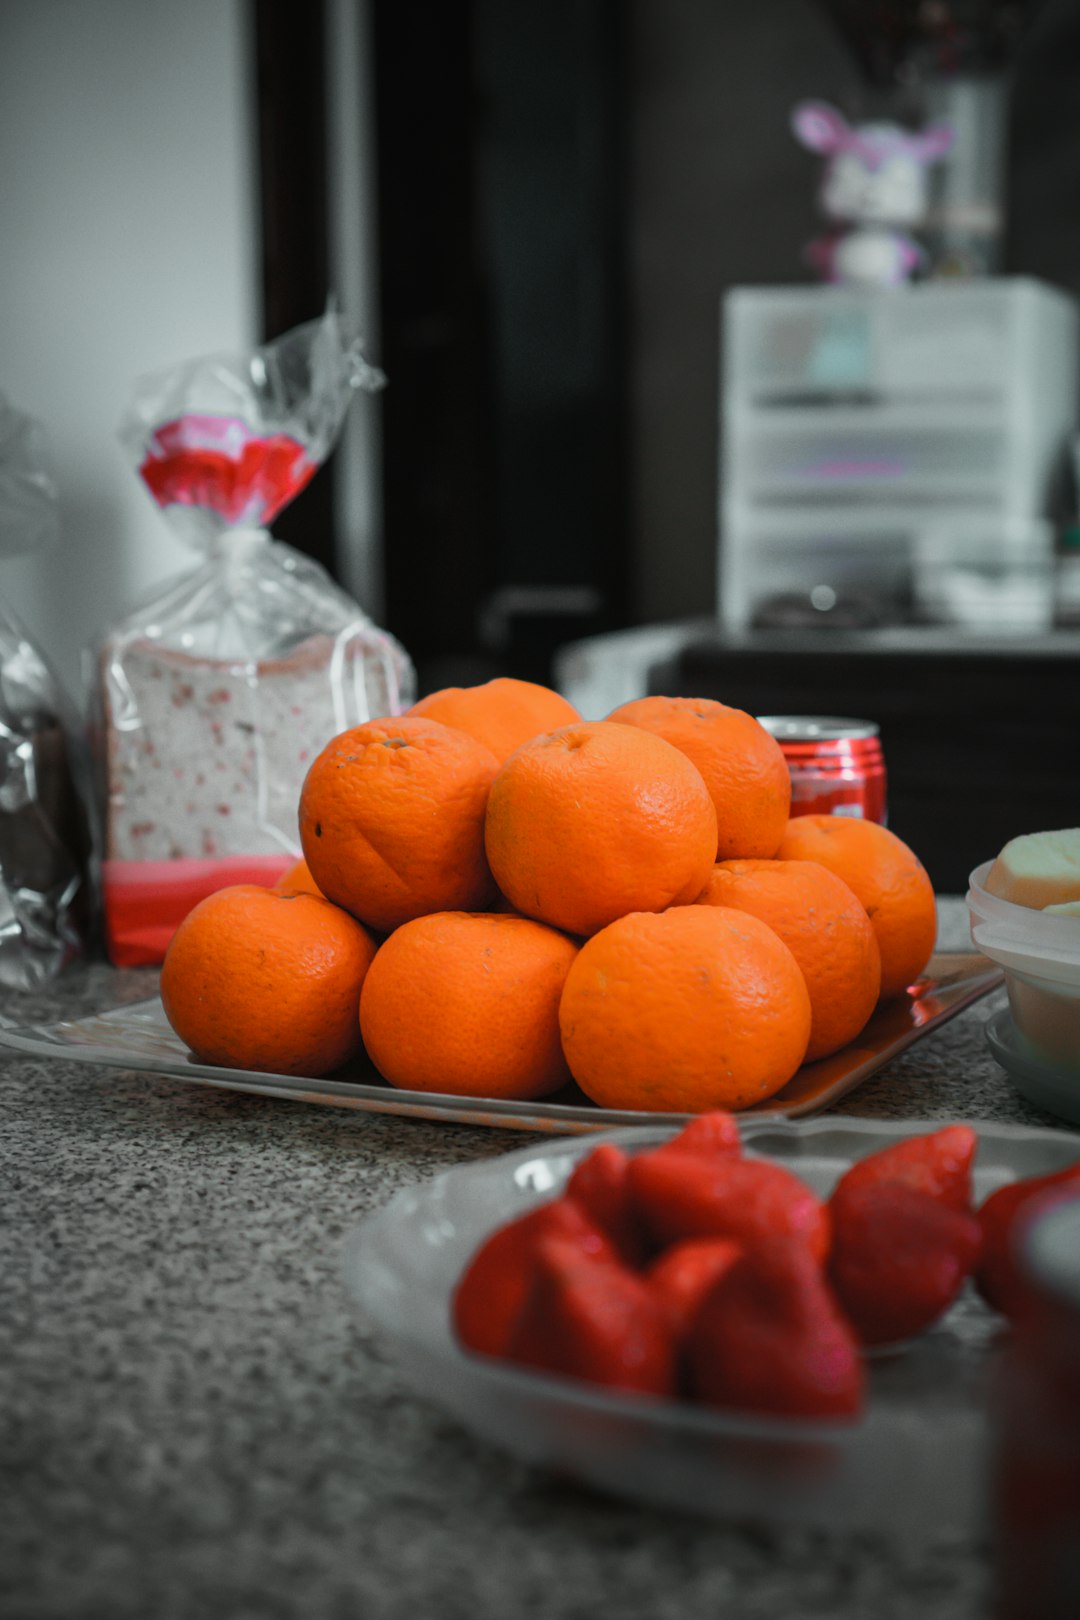 orange fruits on gray table